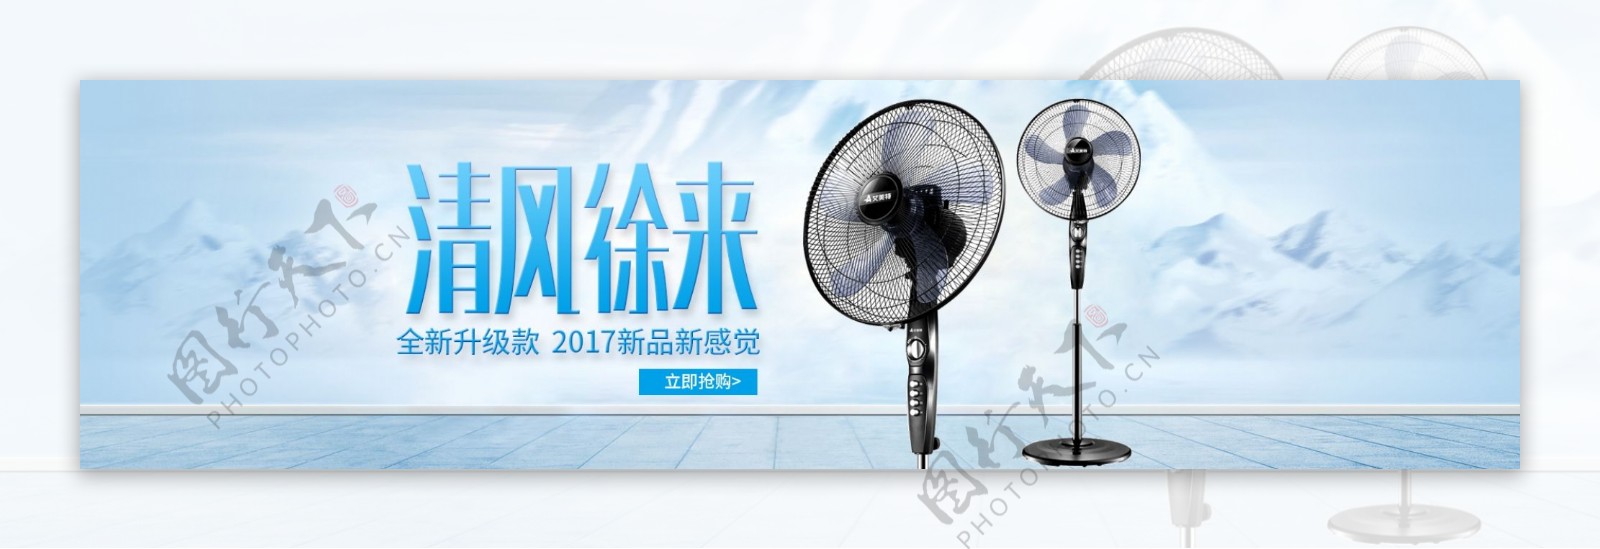 电商风扇促销海报banner